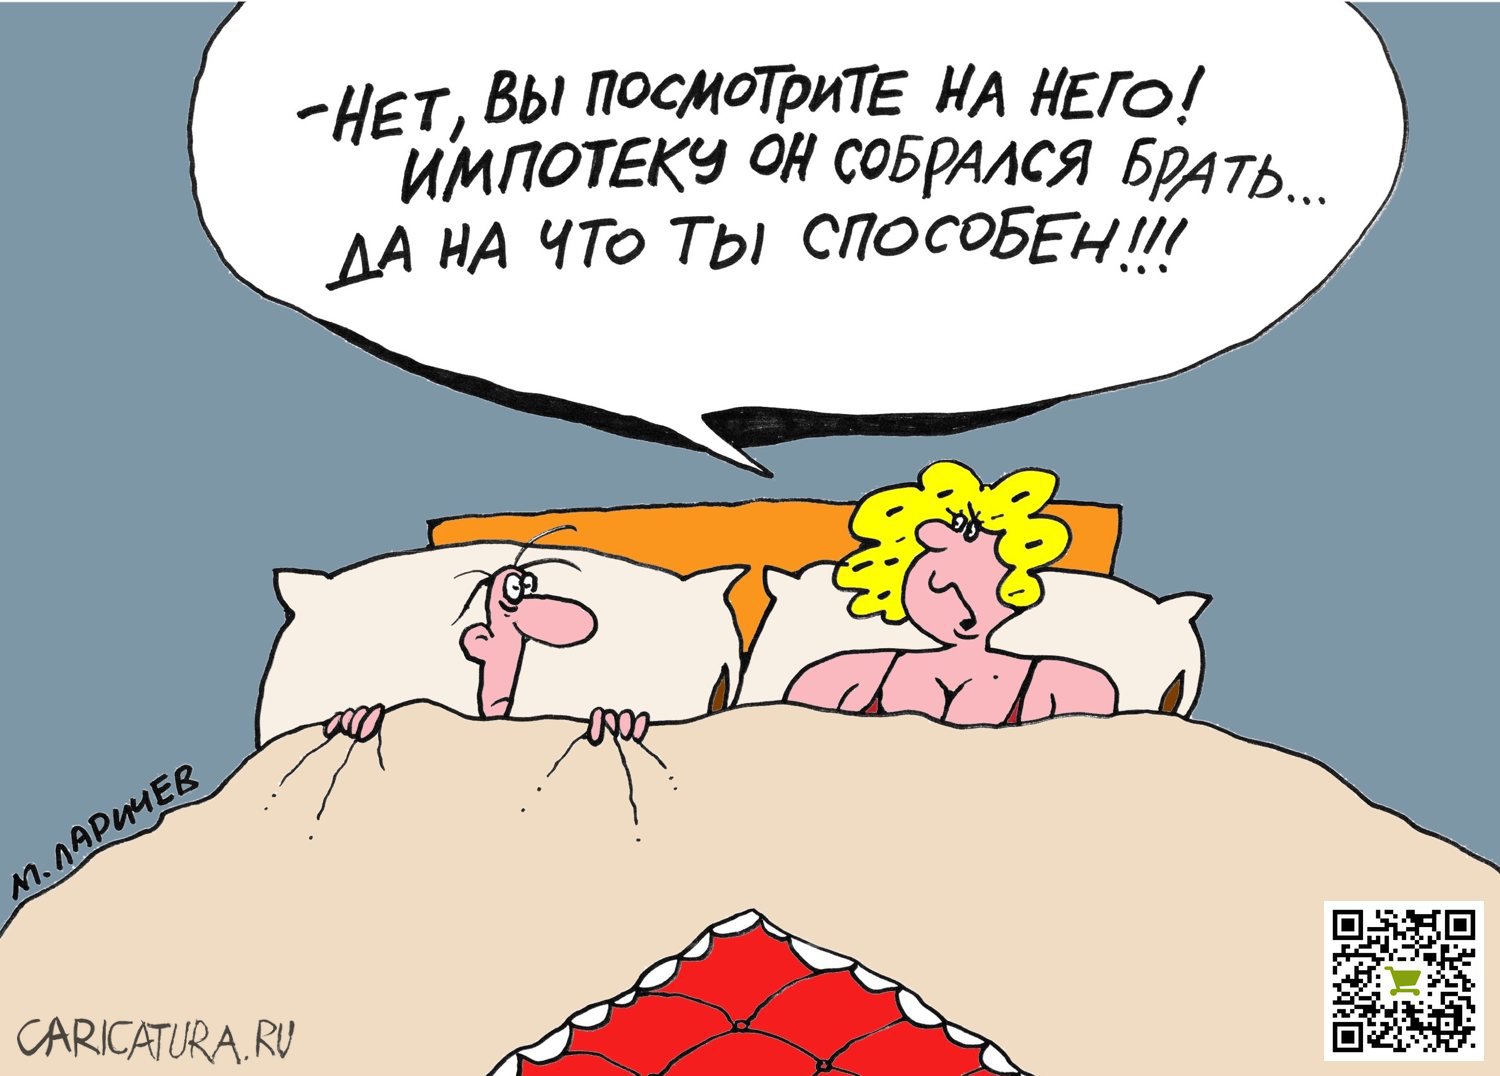 Карикатура "Импотека", Михаил Ларичев